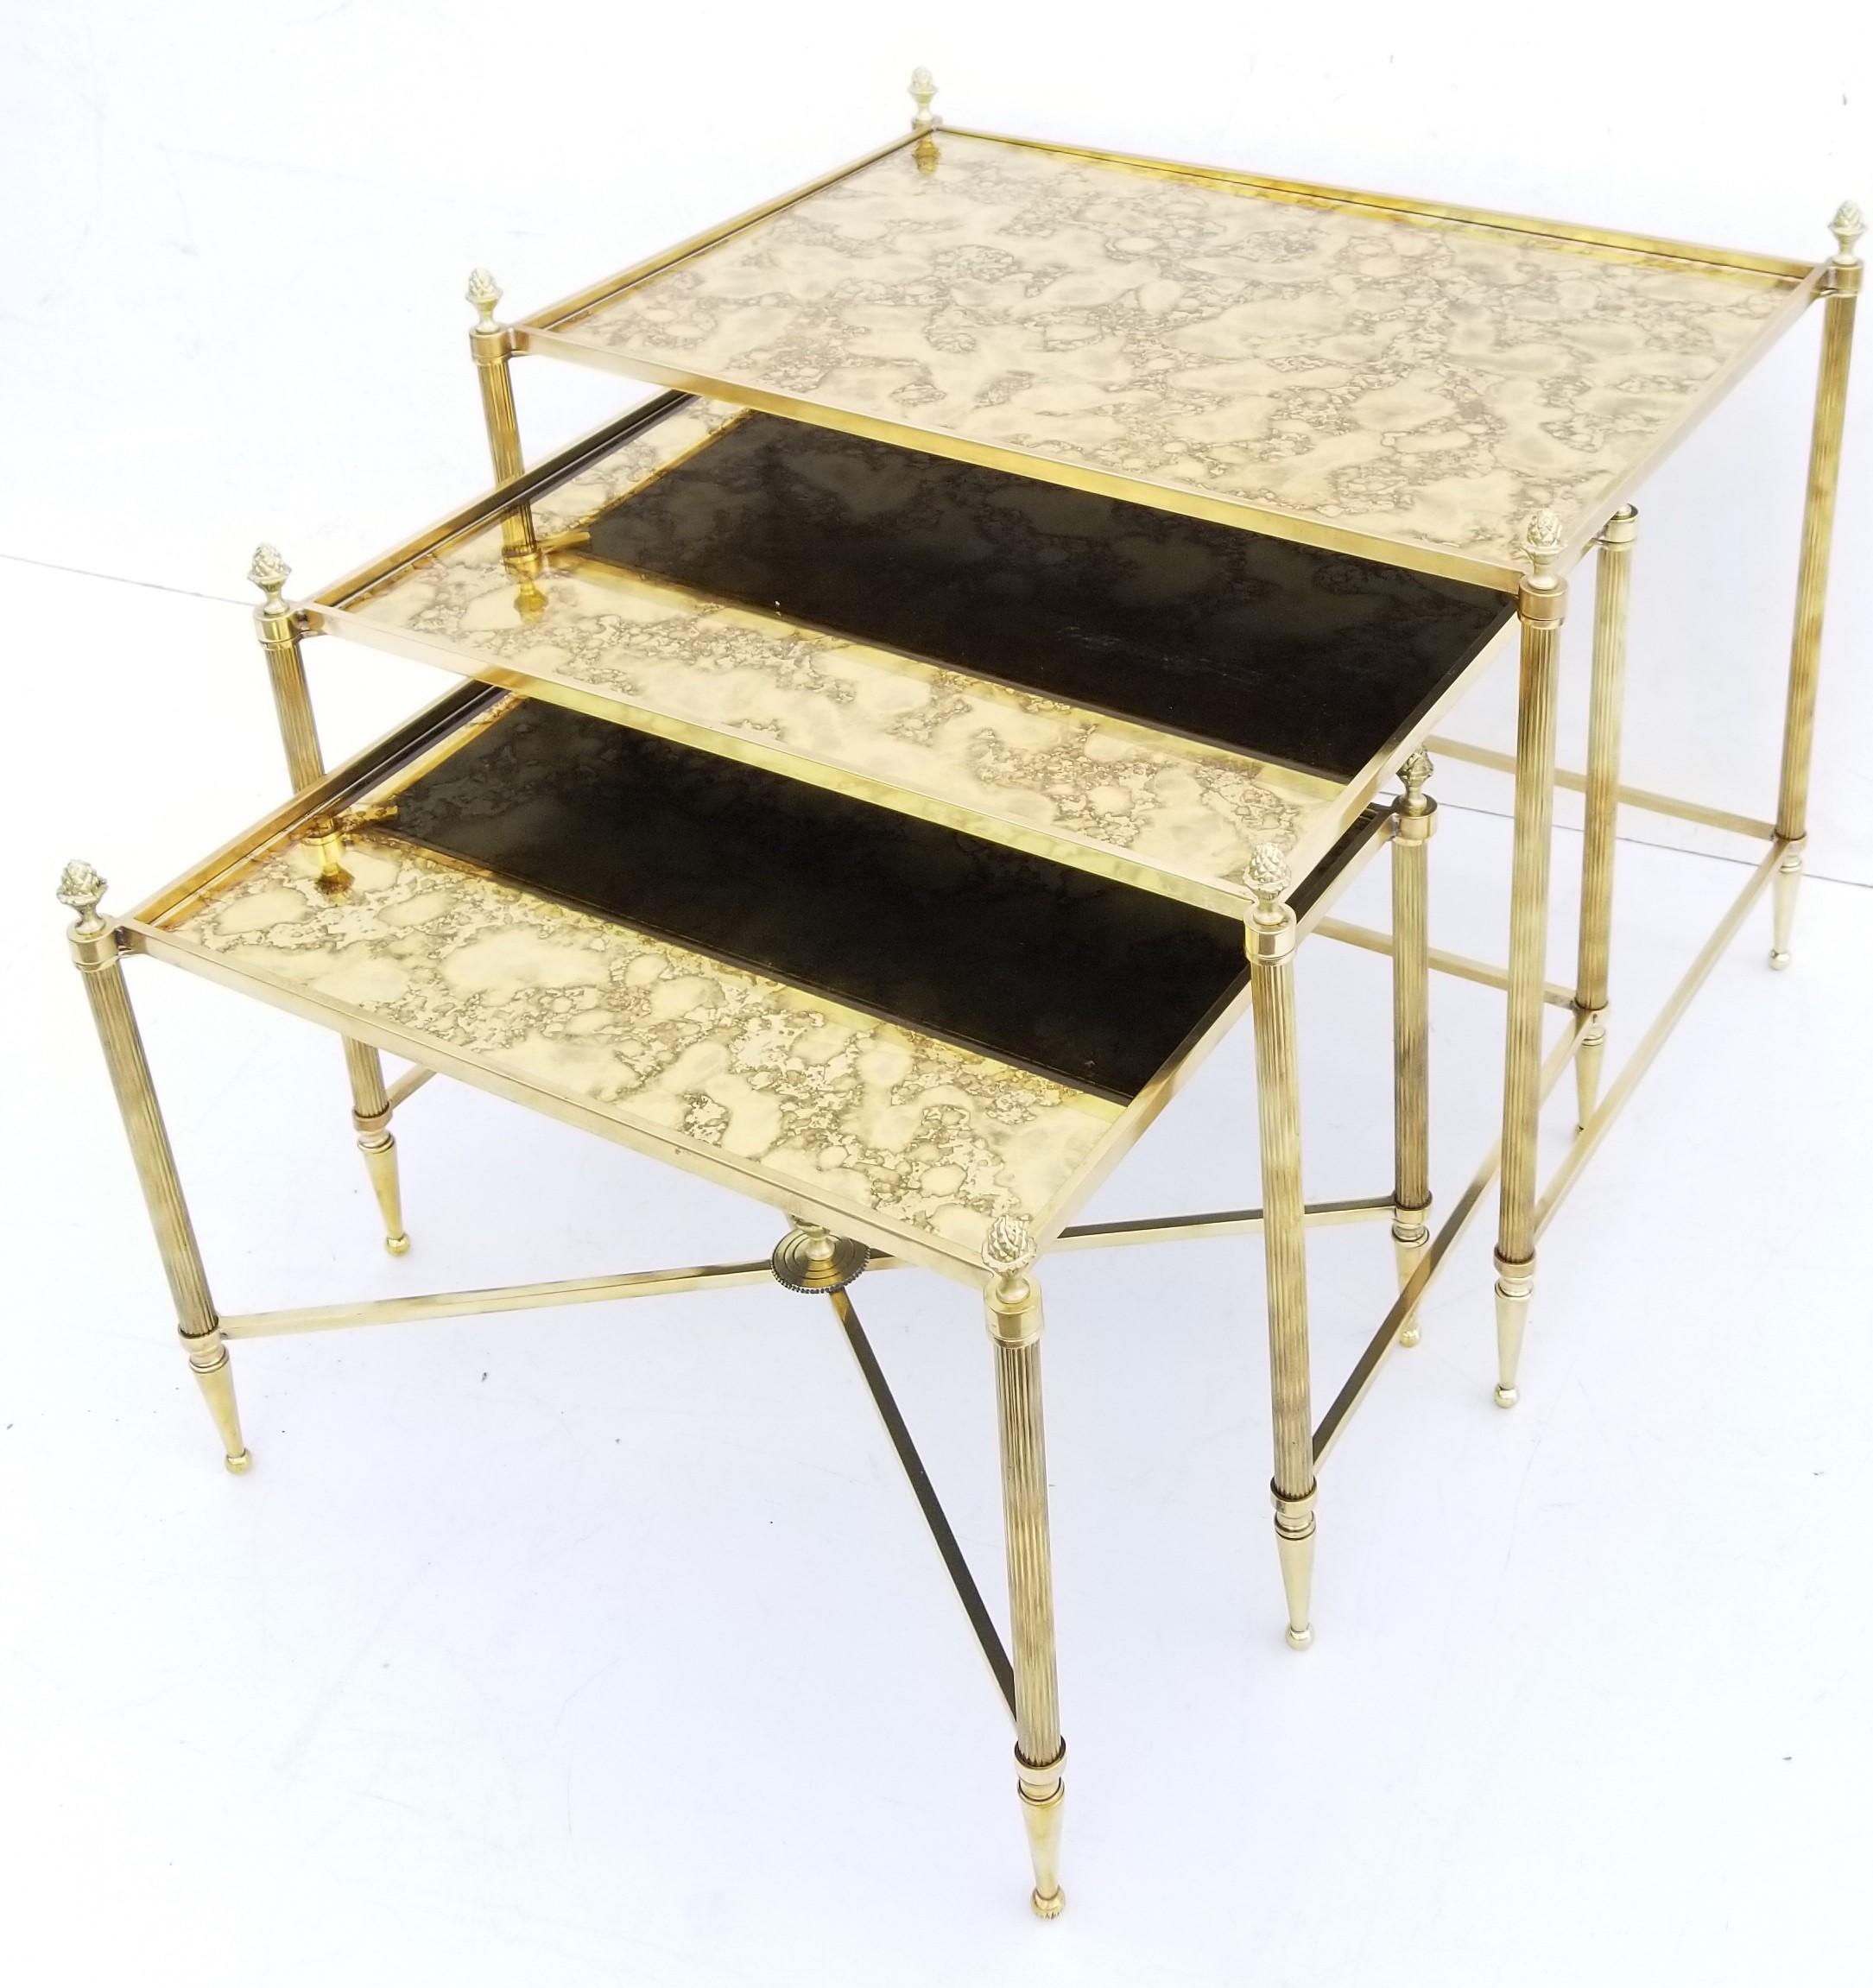 Set of Maison Baguès bronze nesting table, 3 tables 
Gold cloudy mirrors.
Dimensions : W/D/H
23/16/19
20/15/16
19/14/14.
  